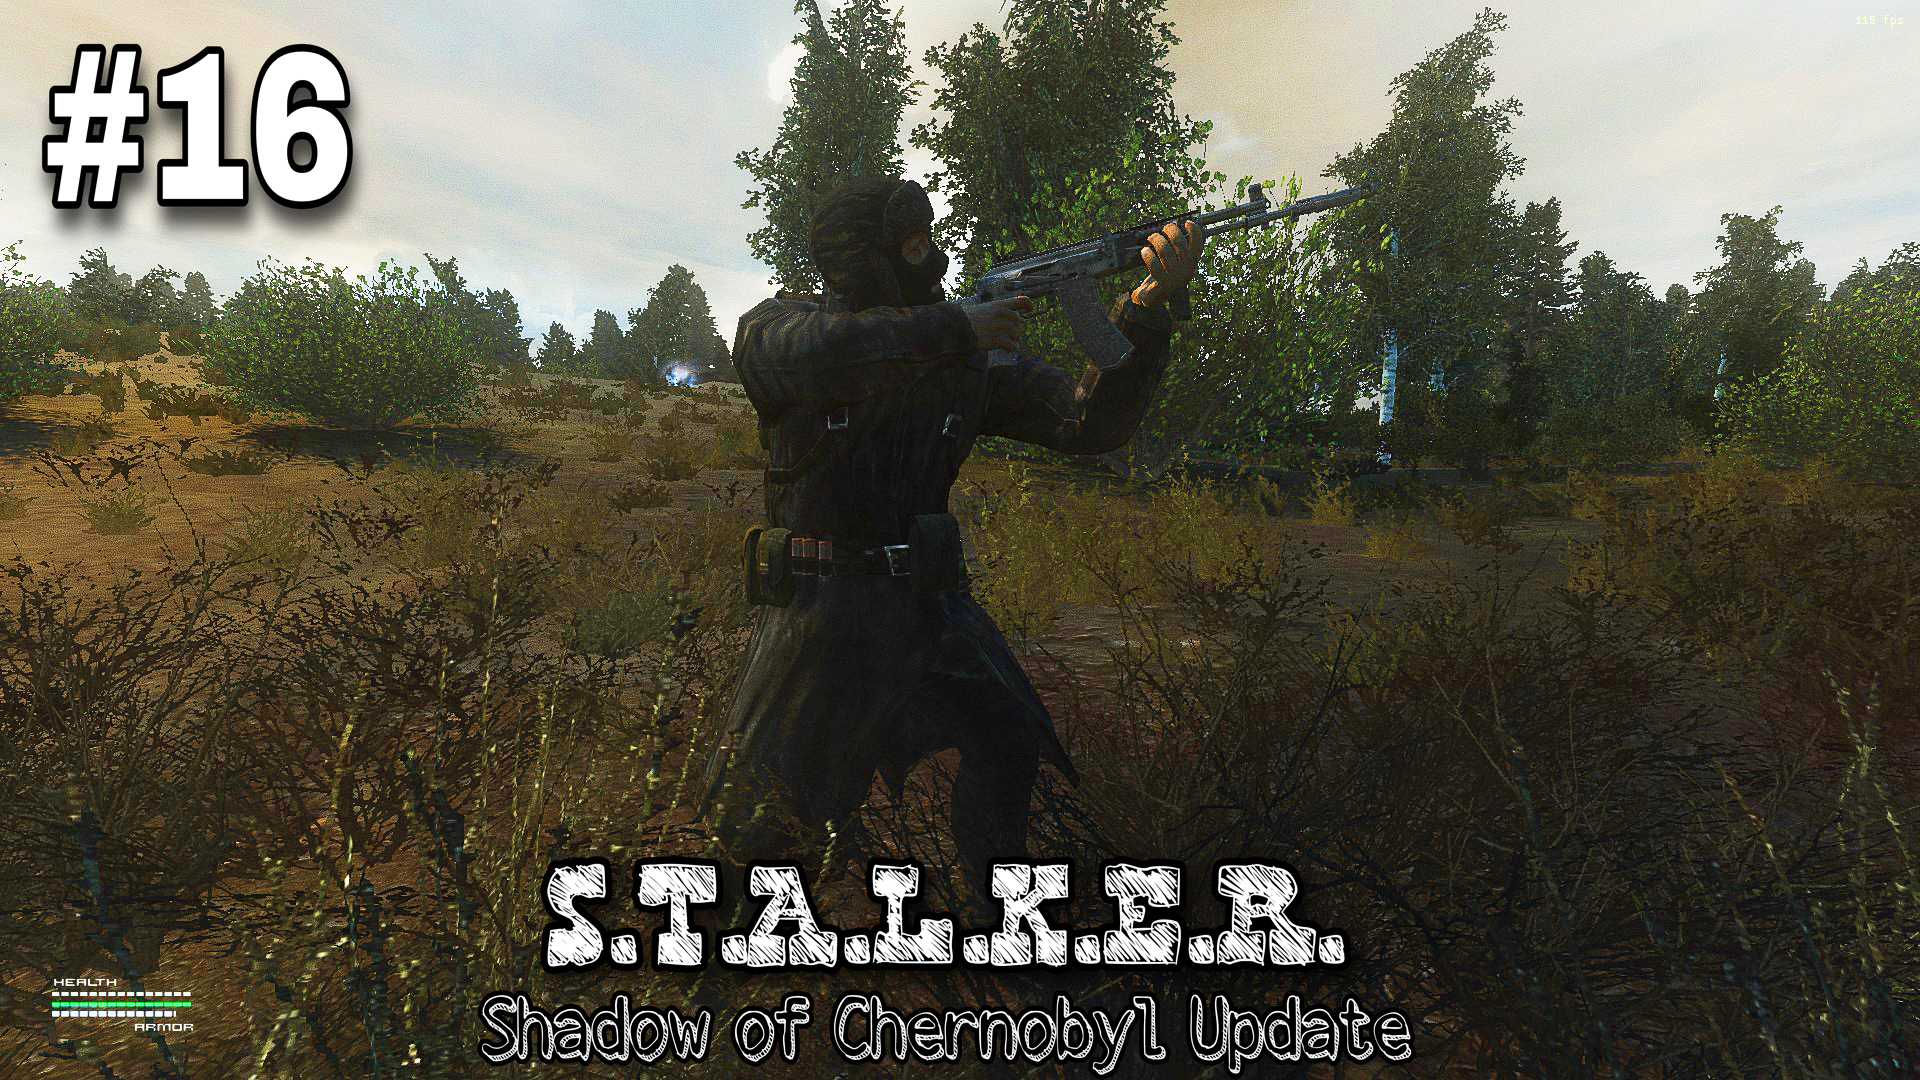 Shadow of chernobyl update 1.0